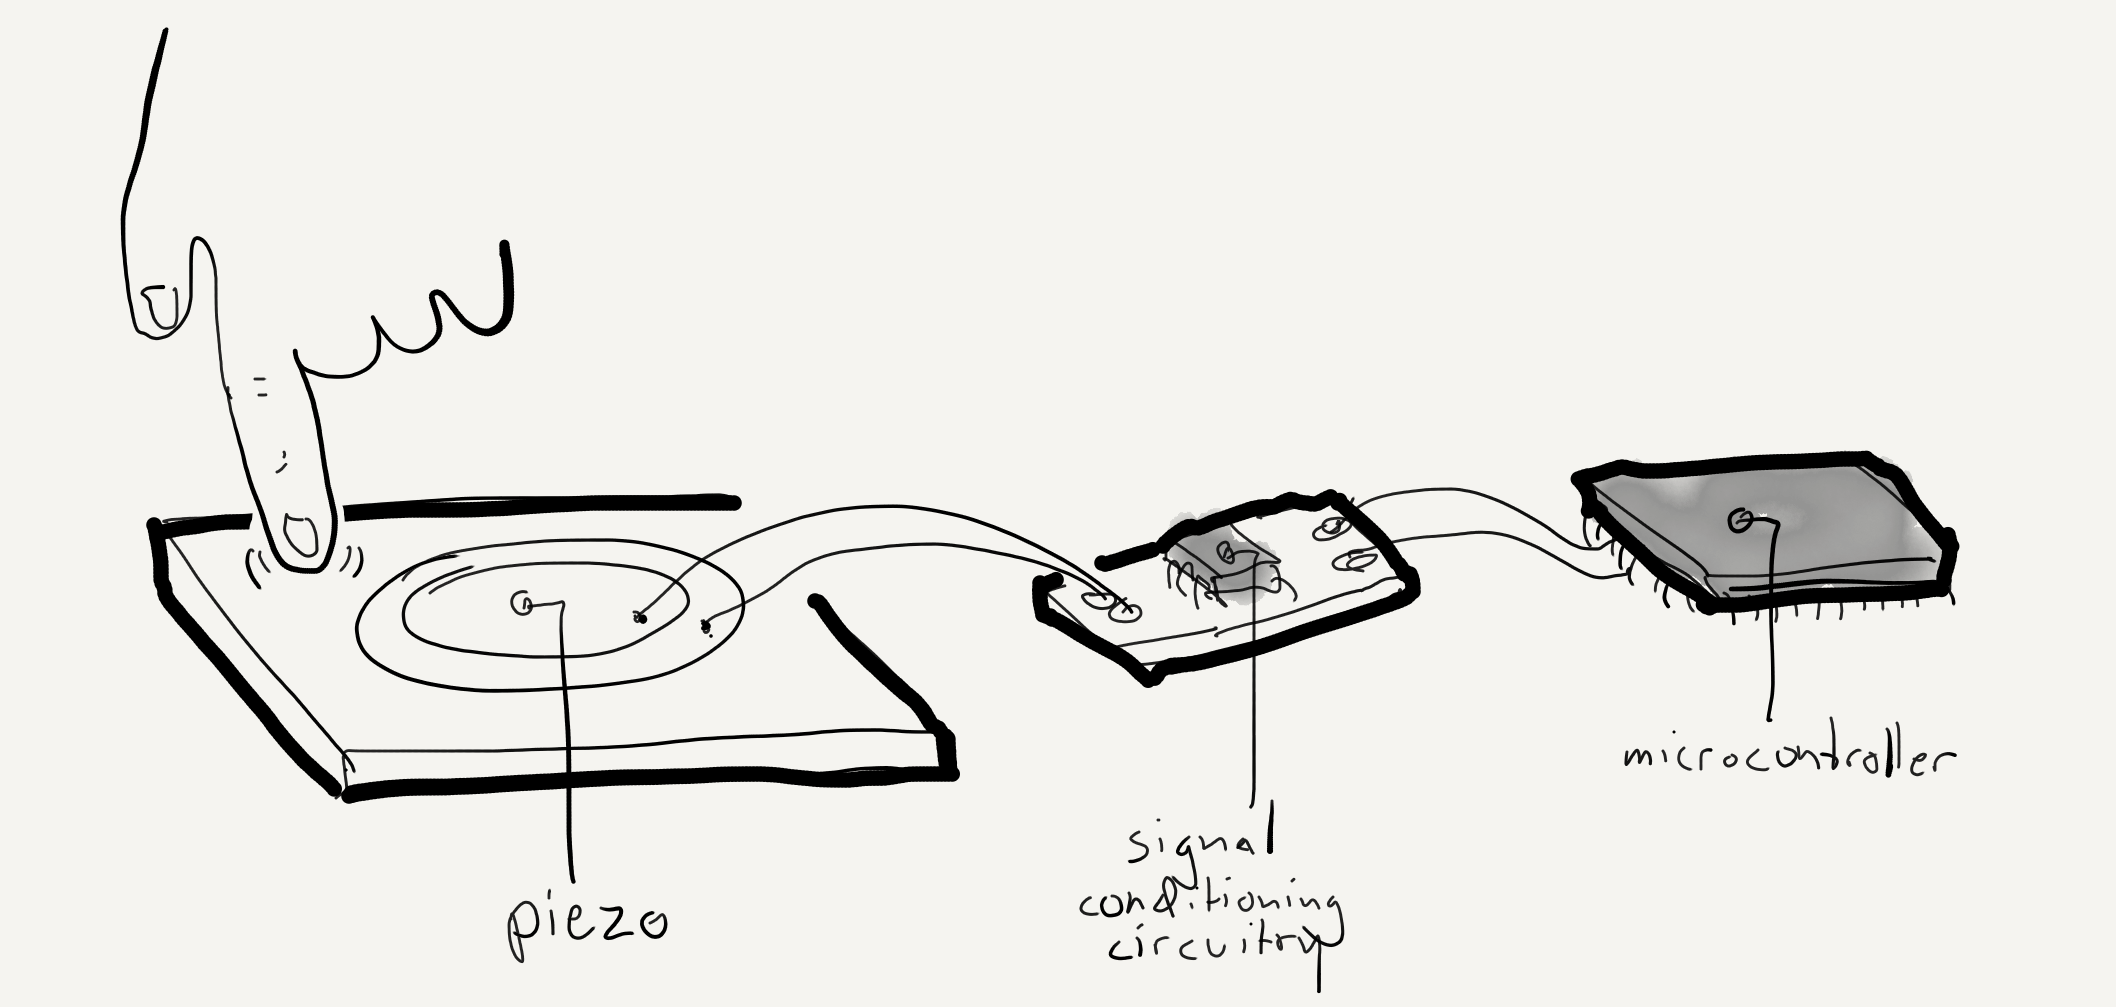 Principle sketch of Caramel components